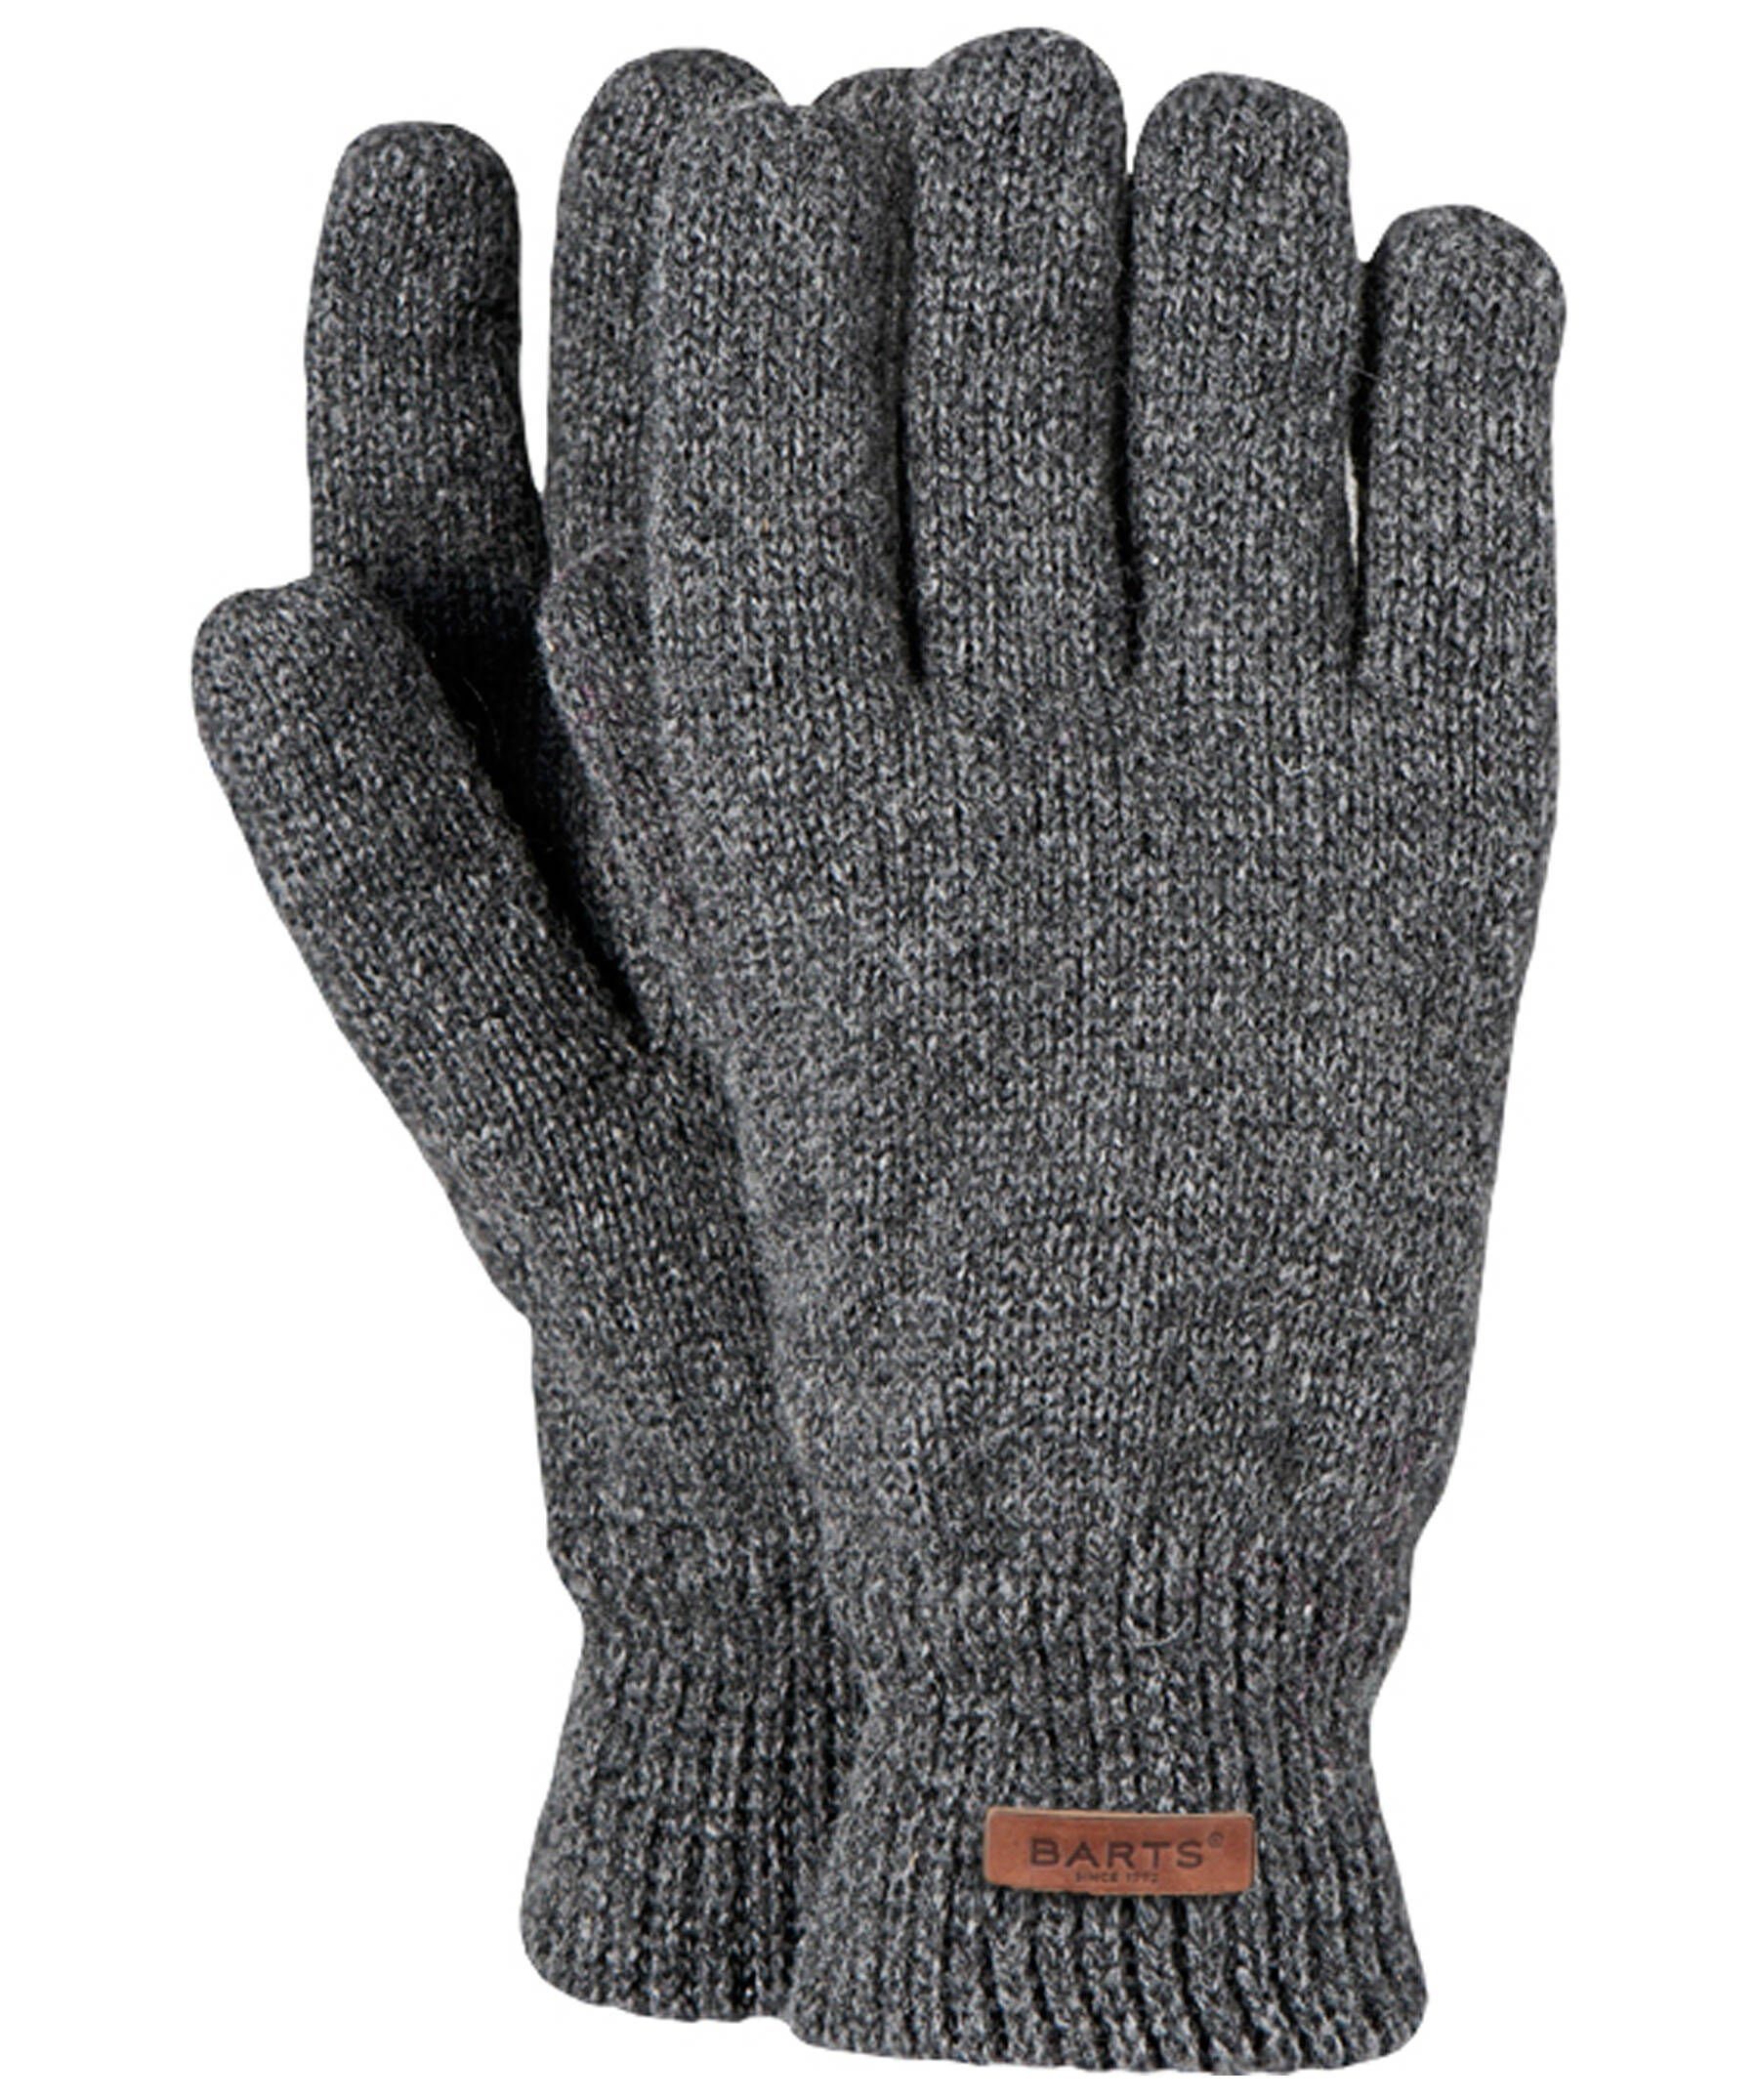 Barts Skihandschuhe Herren Handschuhe / Fingerhandschuhe Haakon Gloves grau (231)